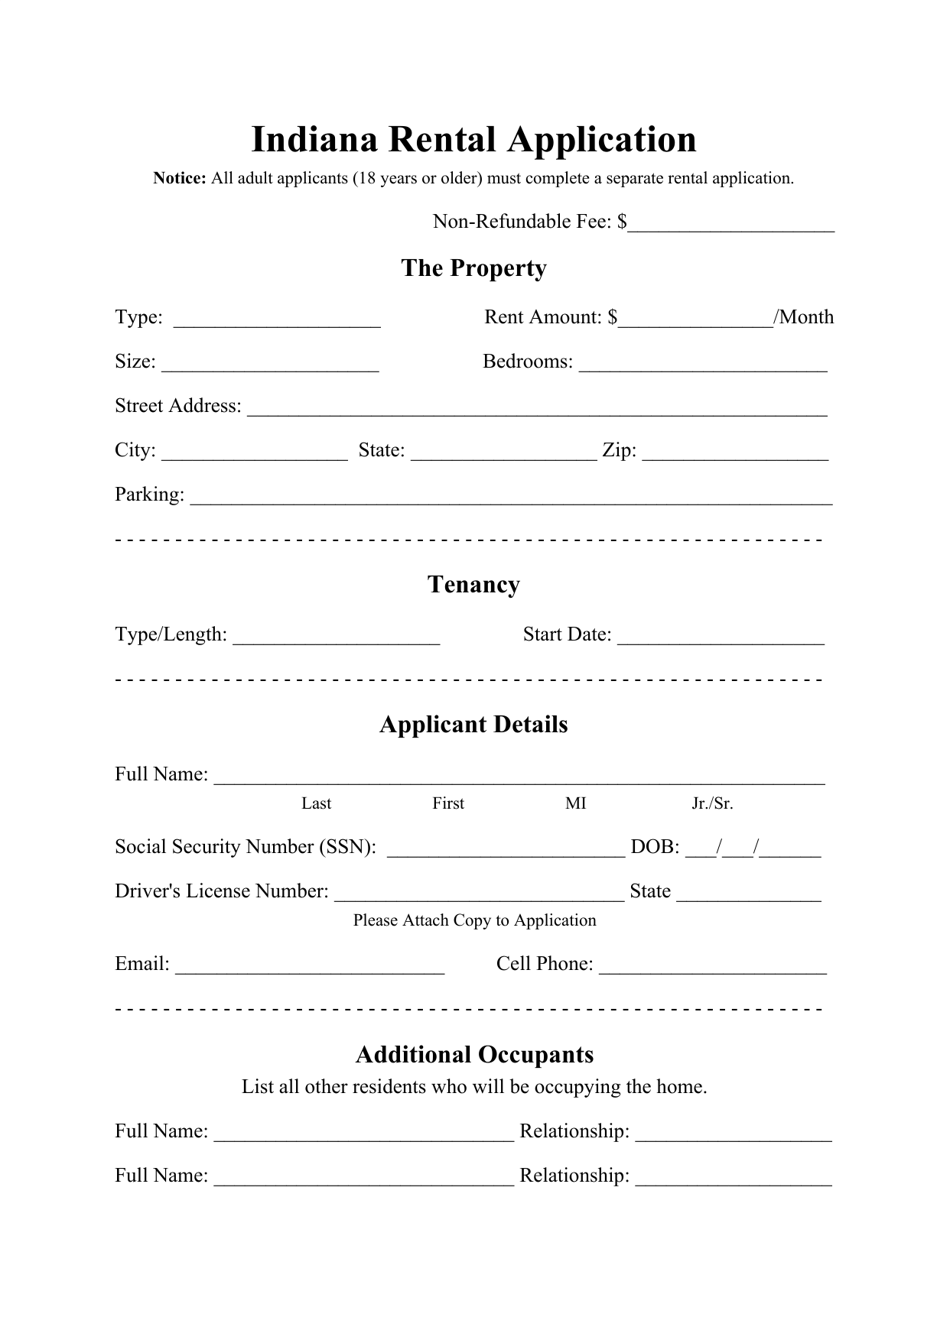 indiana rental application form download printable pdf